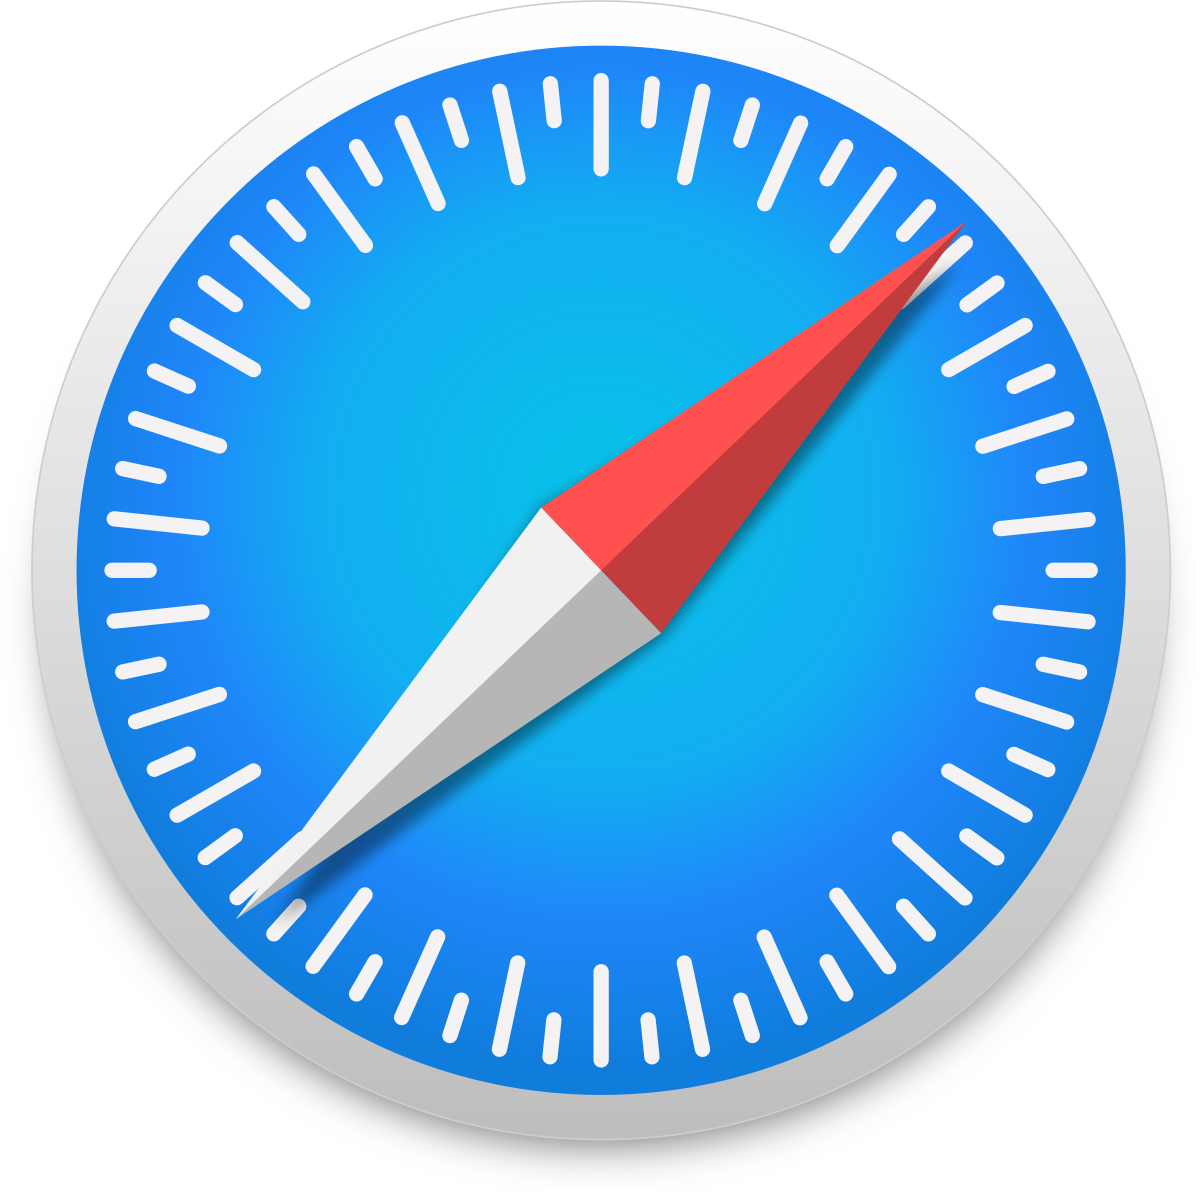 Apple Safari logo